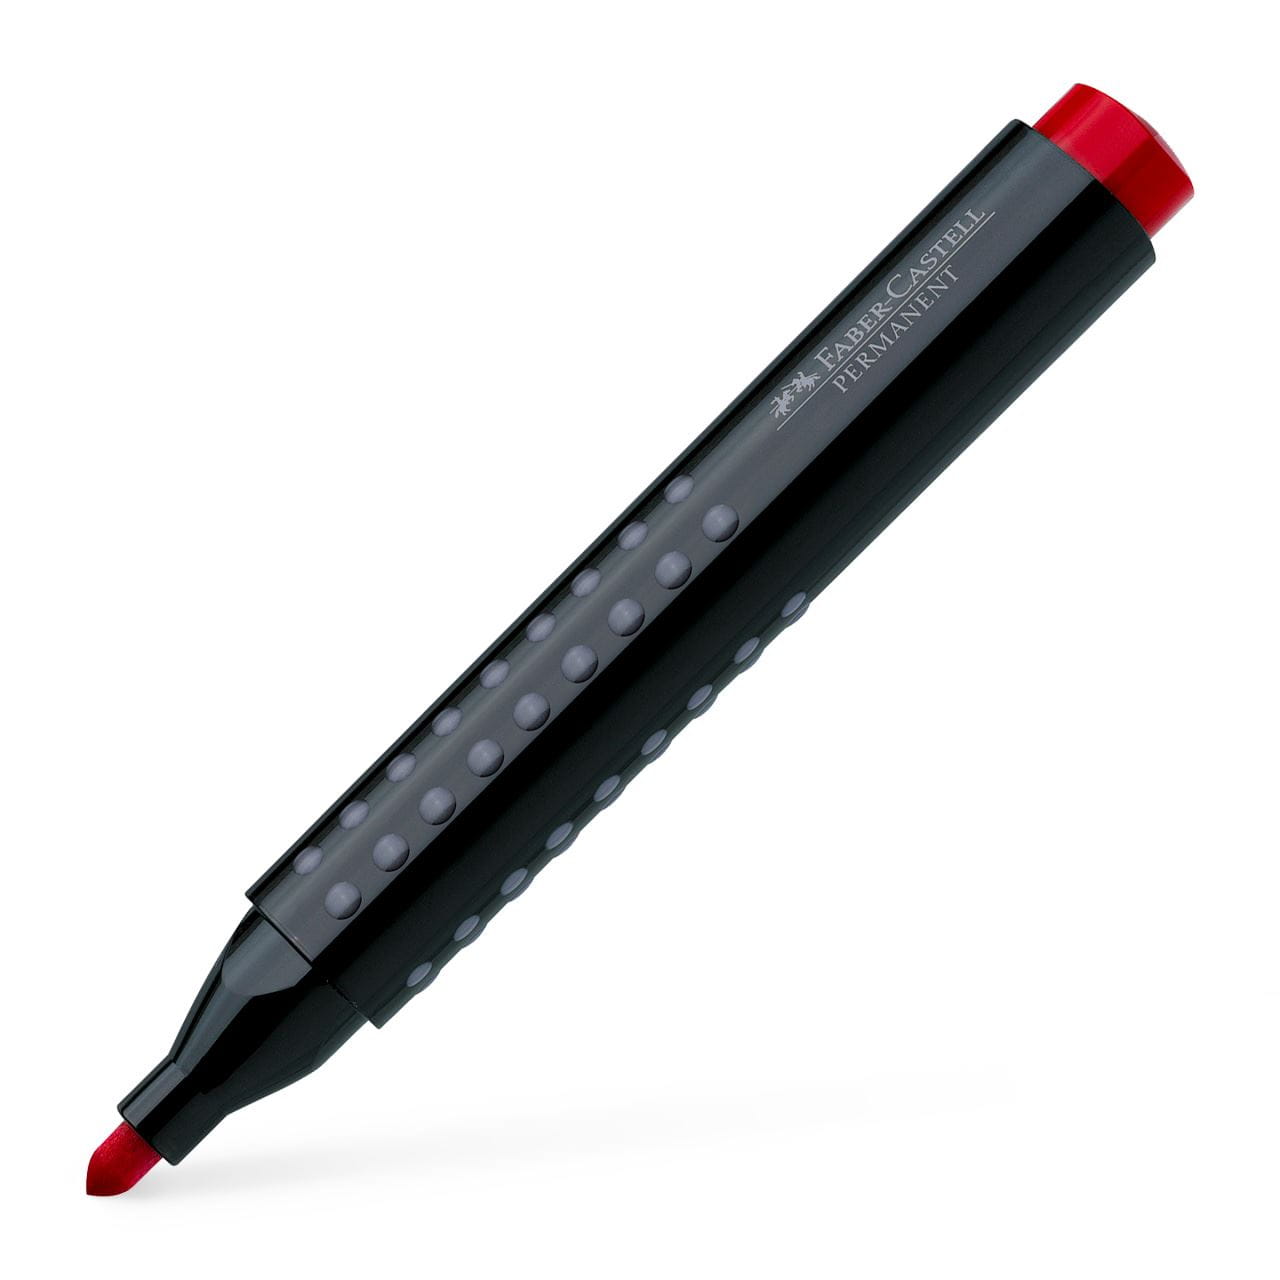 Faber-Castell - Marcador Grip permanente, punta redonda, rojo